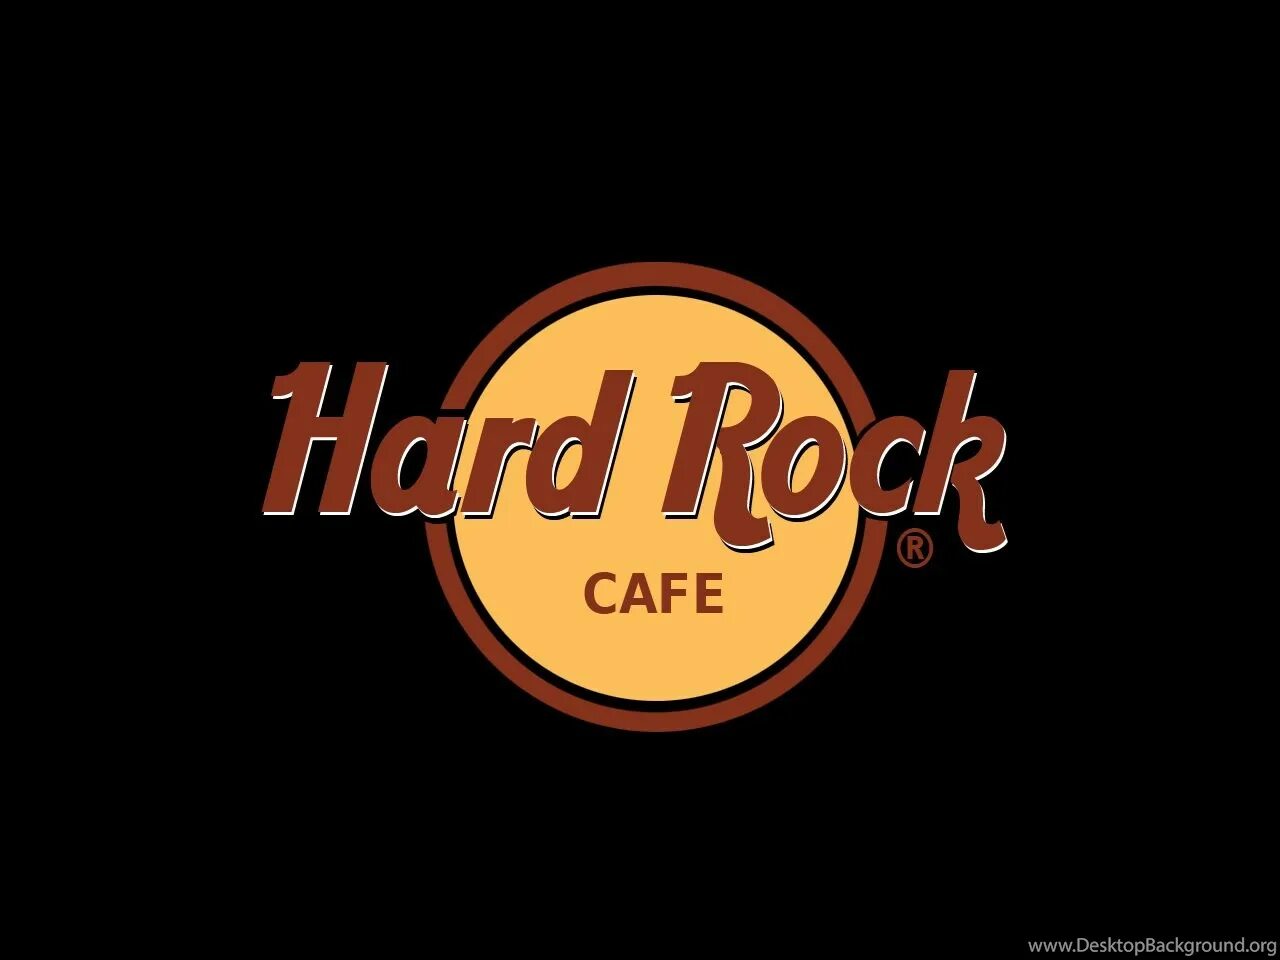 Хард рок сборник. Рок кафе. Хард рок кафе. Рок кафе логотип. Хард рок логотип.